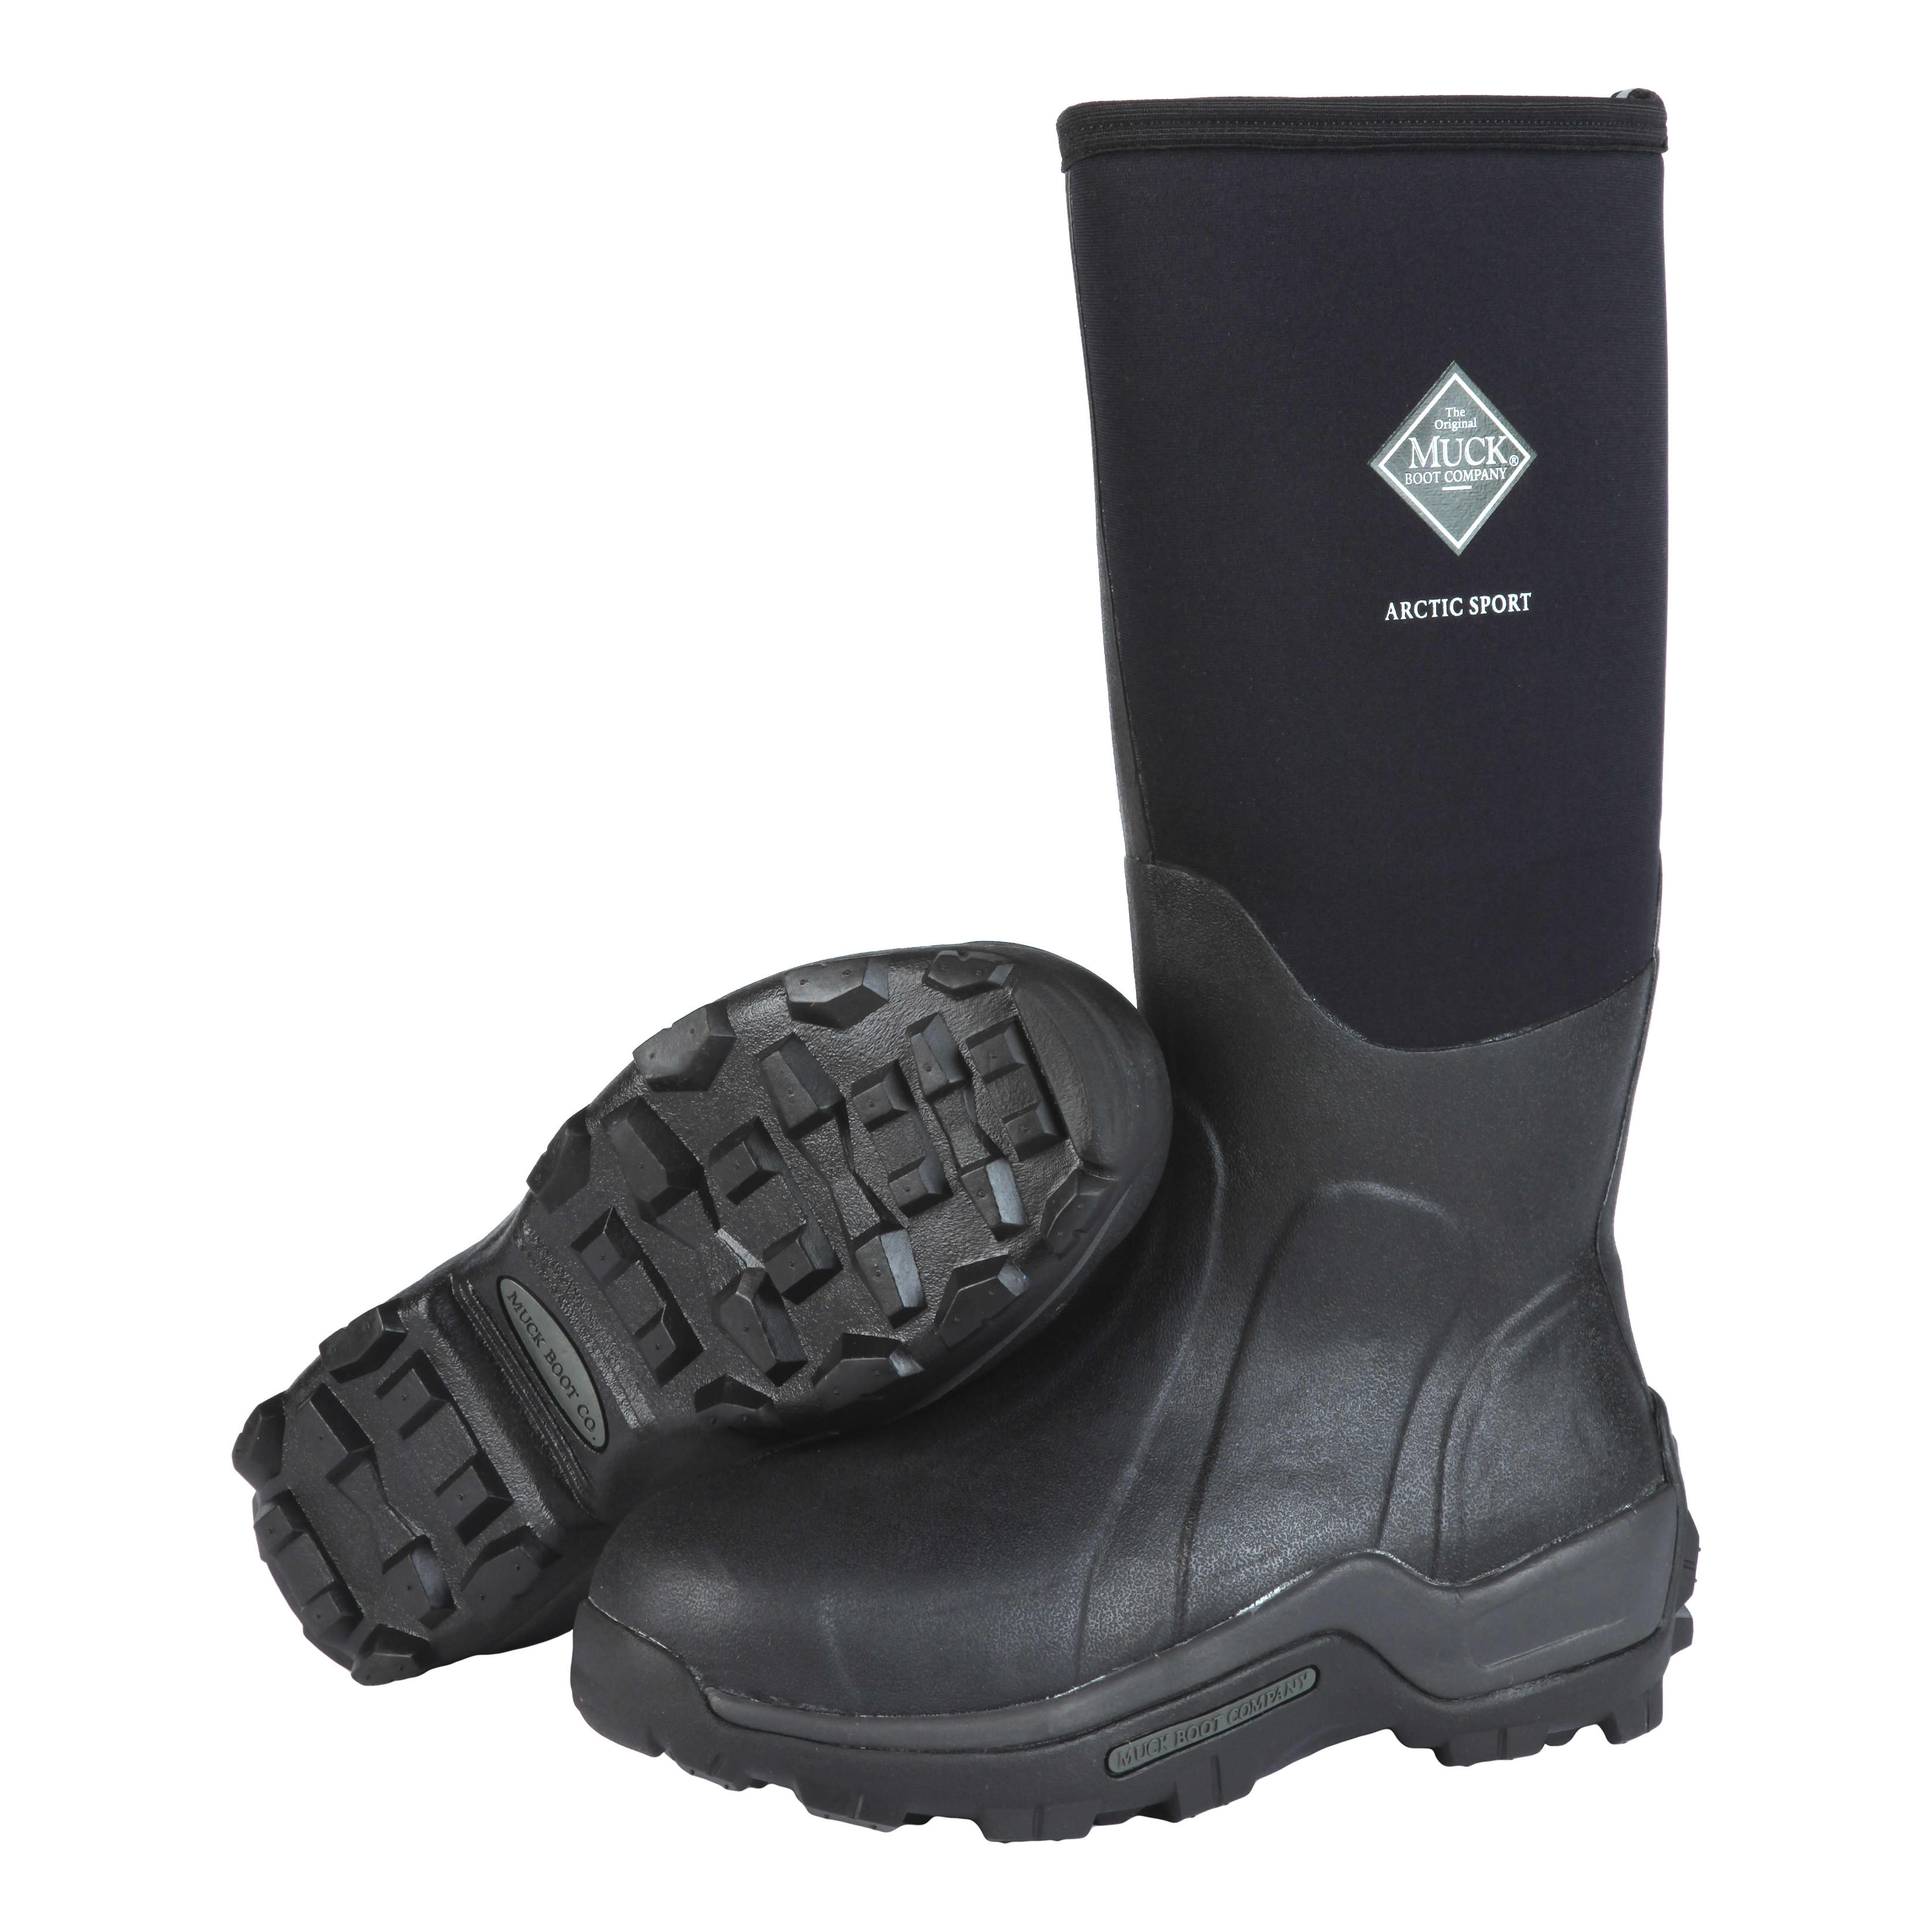 Muck Boots Arctic Sport Tall Black - 12